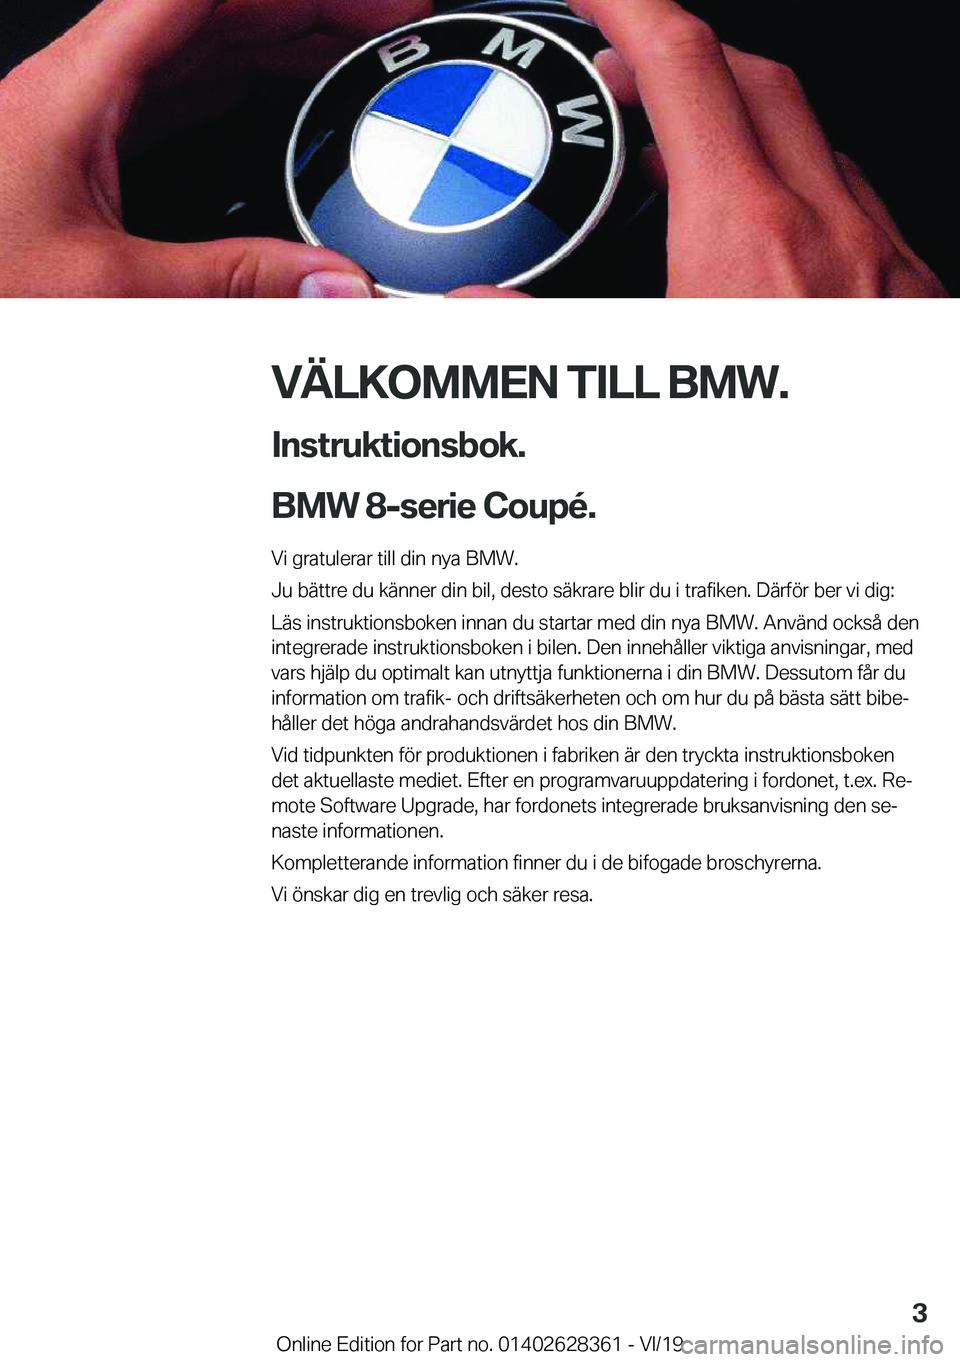 BMW 8 SERIES COUPE 2020  InstruktionsbÖcker (in Swedish) �V�Ä�L�K�O�M�M�E�N��T�I�L�L��B�M�W�.�I�n�s�t�r�u�k�t�i�o�n�s�b�o�k�.
�B�M�W��8�-�s�e�r�i�e��C�o�u�p�